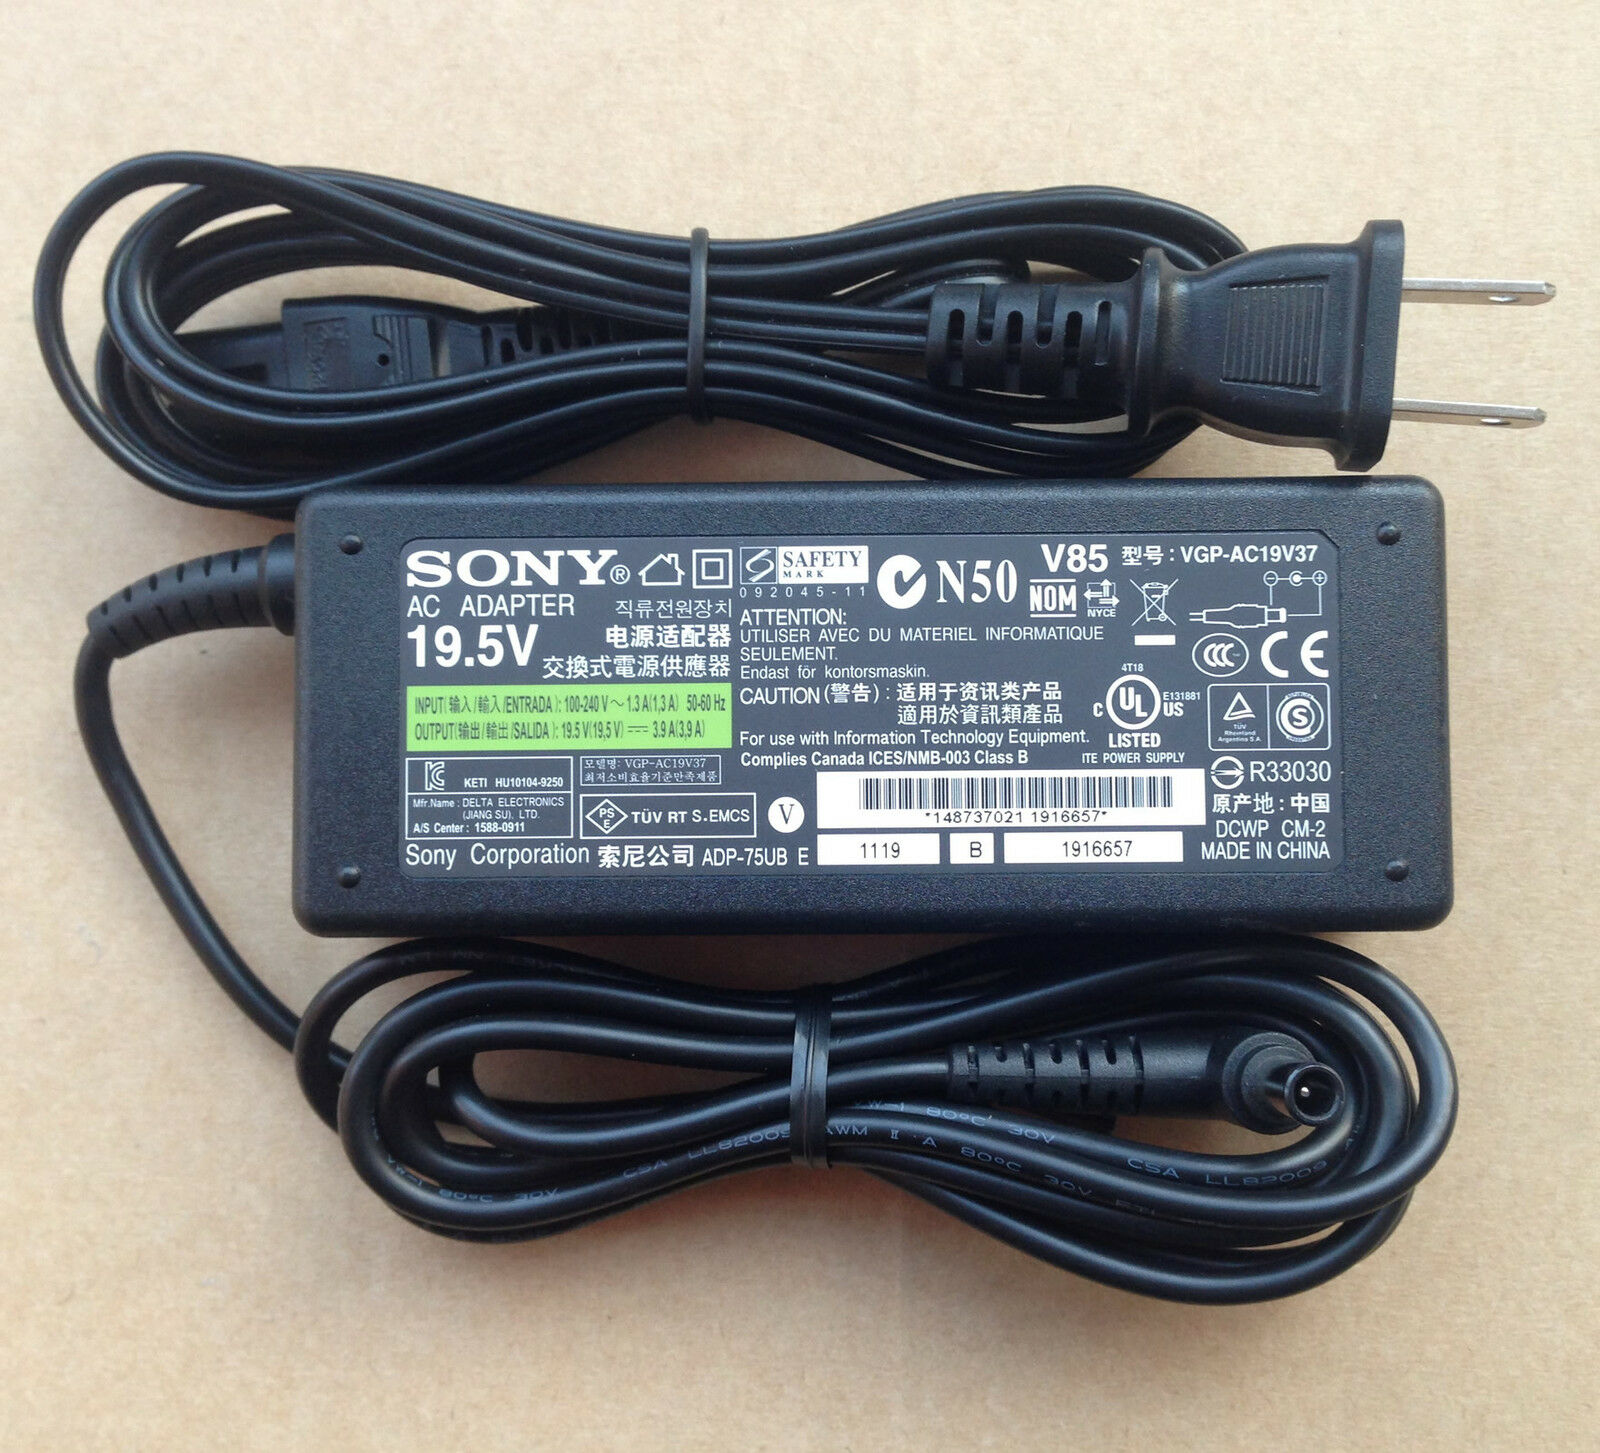 Original OEM 75W 19.5V AC Adapter for SONY VAIO VGP-AC19V37,ADP-75UB,N50,R33030 Brand: Sony Output Voltage(s): 19.5